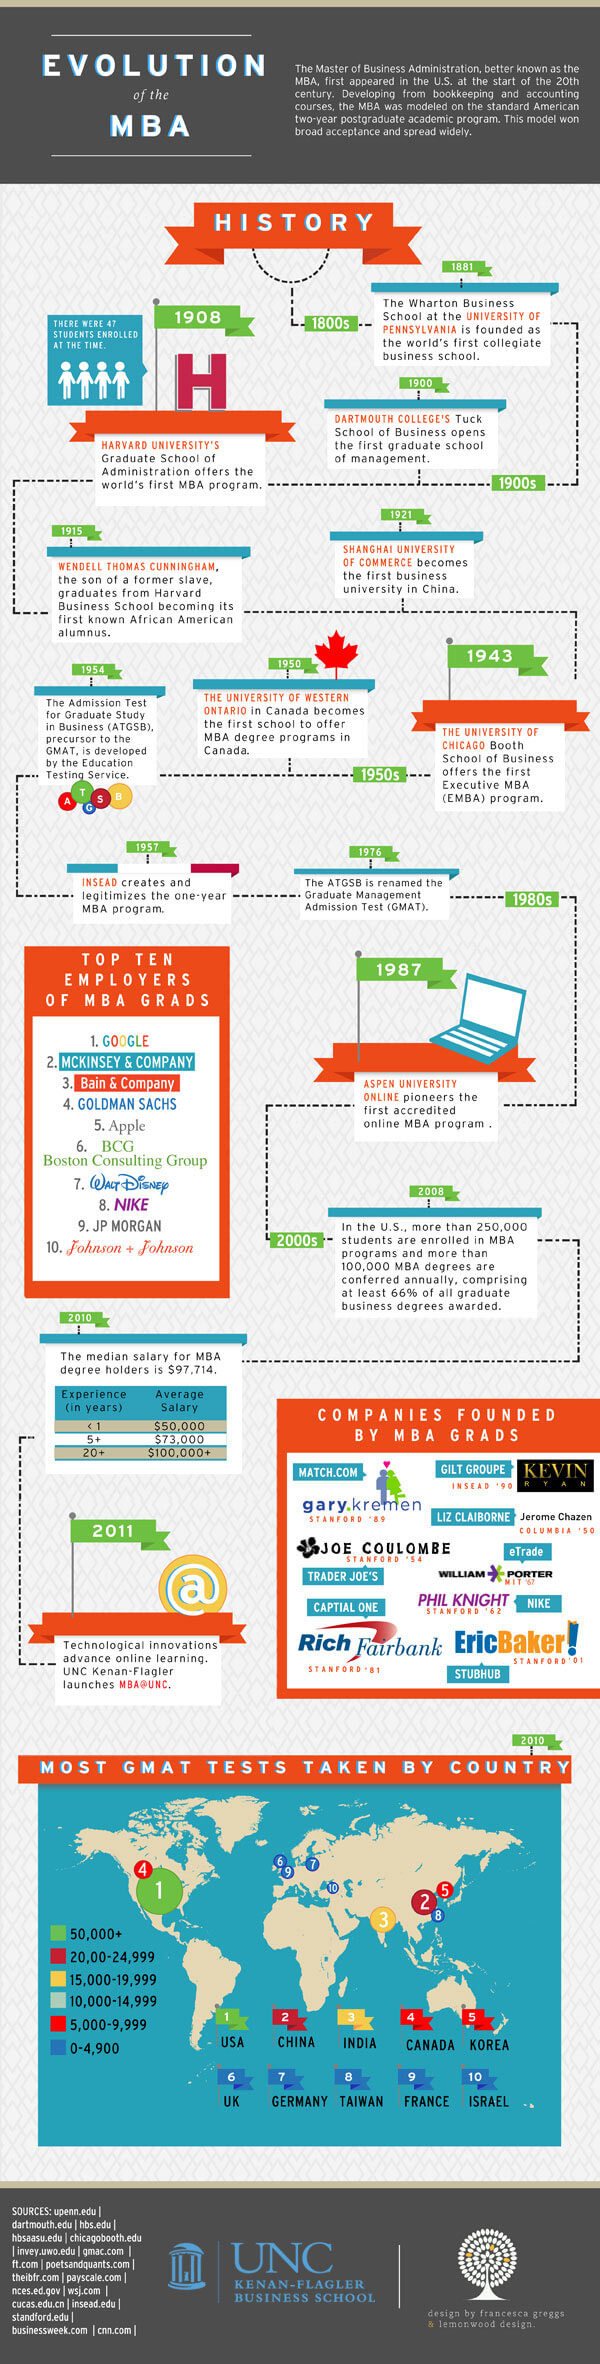 Инфографика: Эволюция MBA